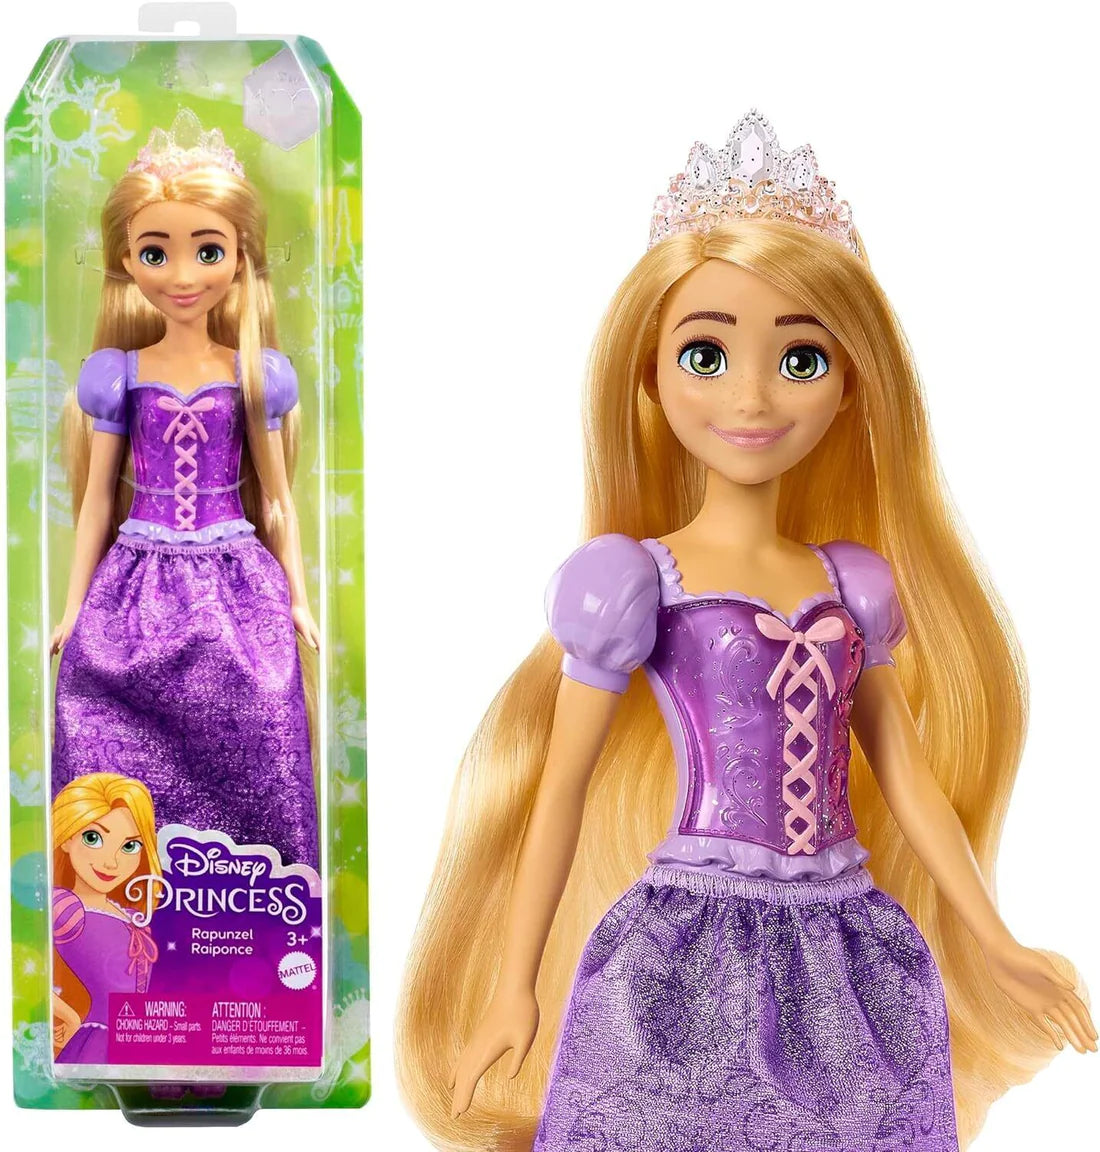 Disney Princess Toys Dolls Brand New Sleeping Beauty Snow White Shimmer Dolls - RAPUNZEL